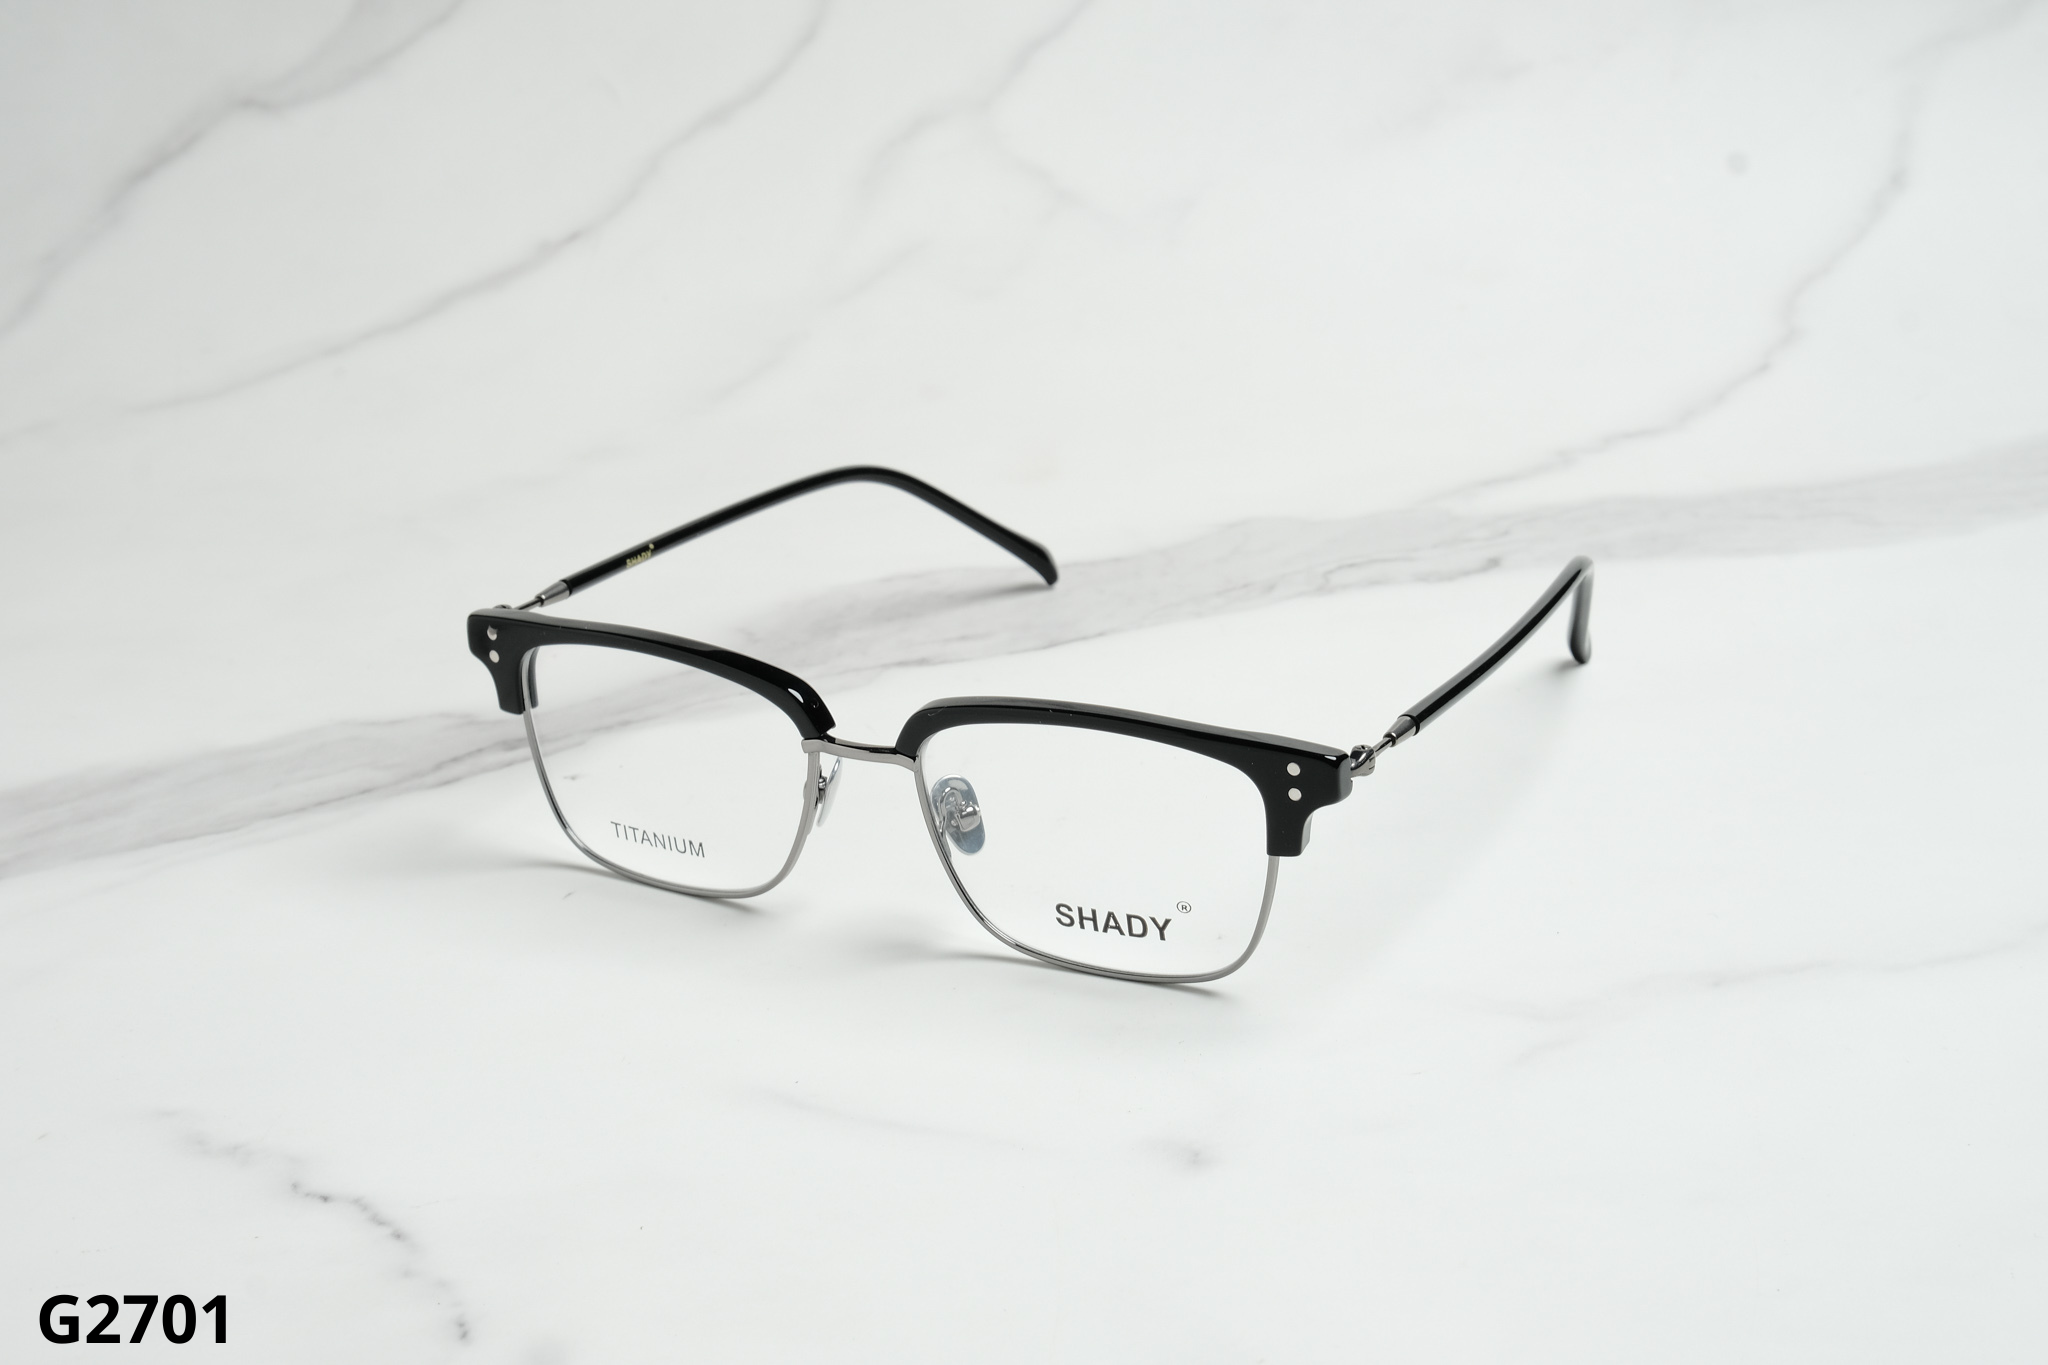  SHADY Eyewear - Glasses - G2701 